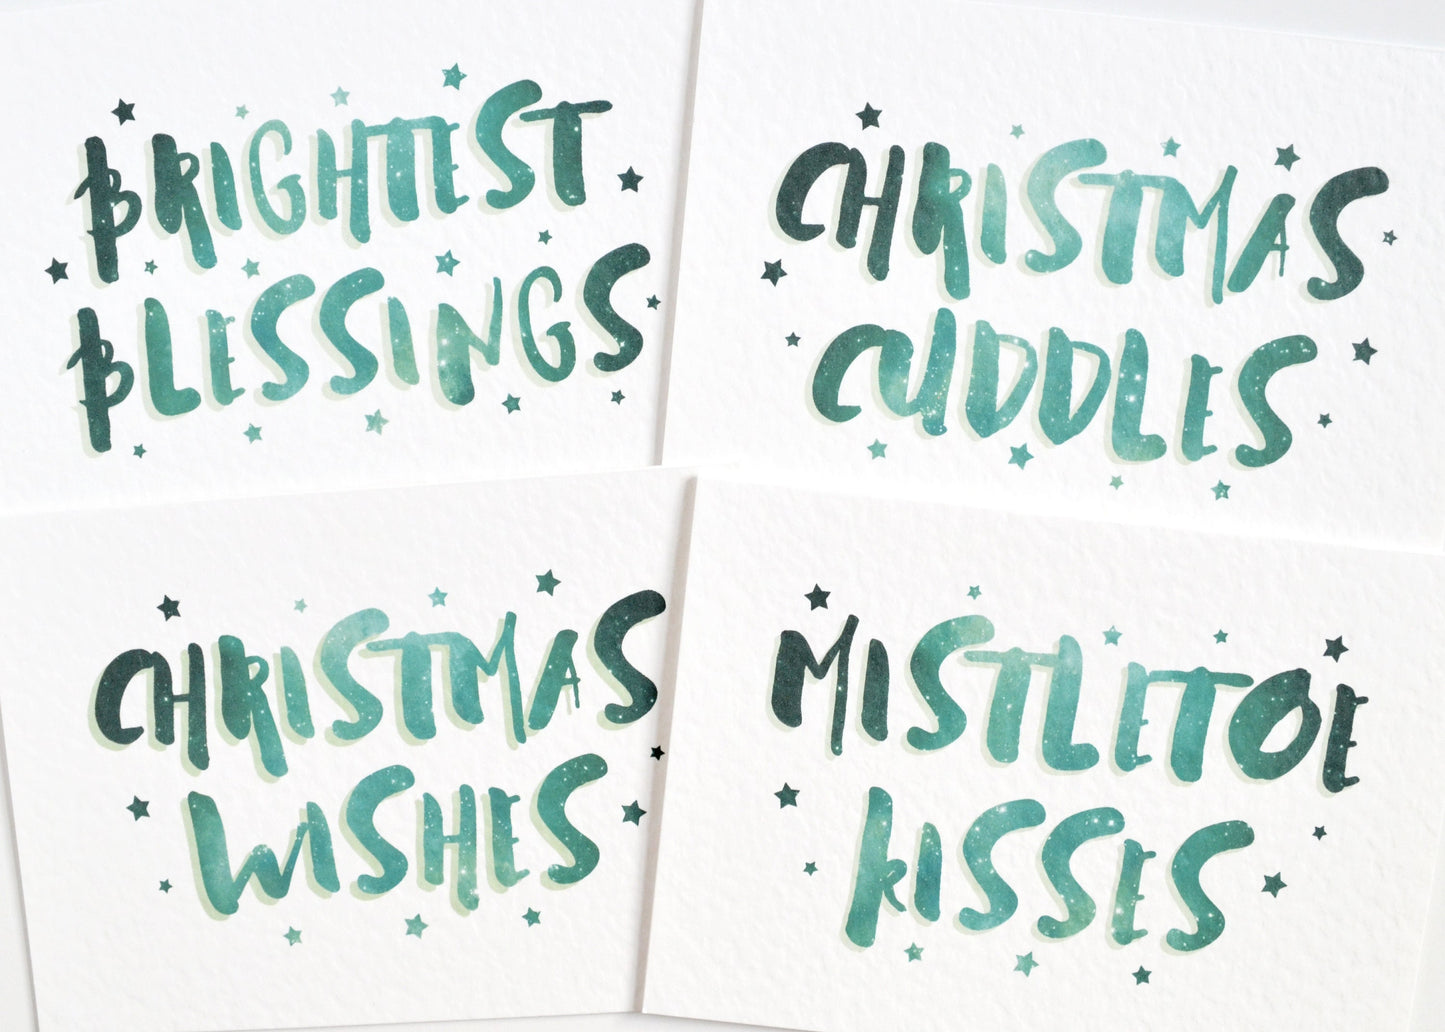 "Brightest Blessings" Celestial Christmas Card